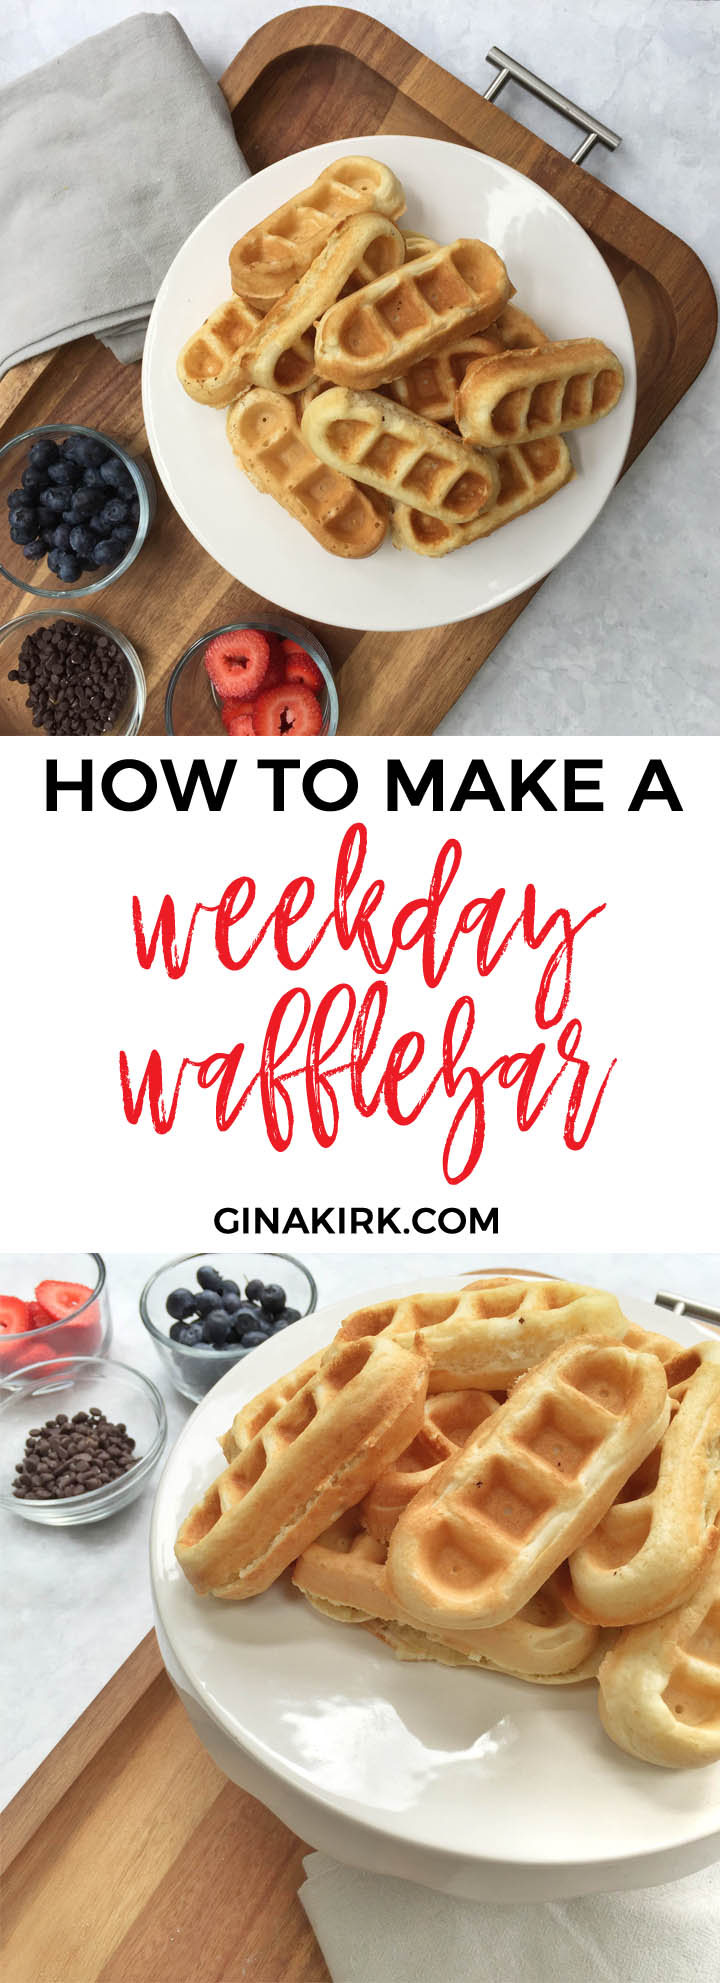 How to make breakfast more fun with a weekday waffle bar! Fun breakfast idea for kids or adults. GinaKirk.com @ginaekirk